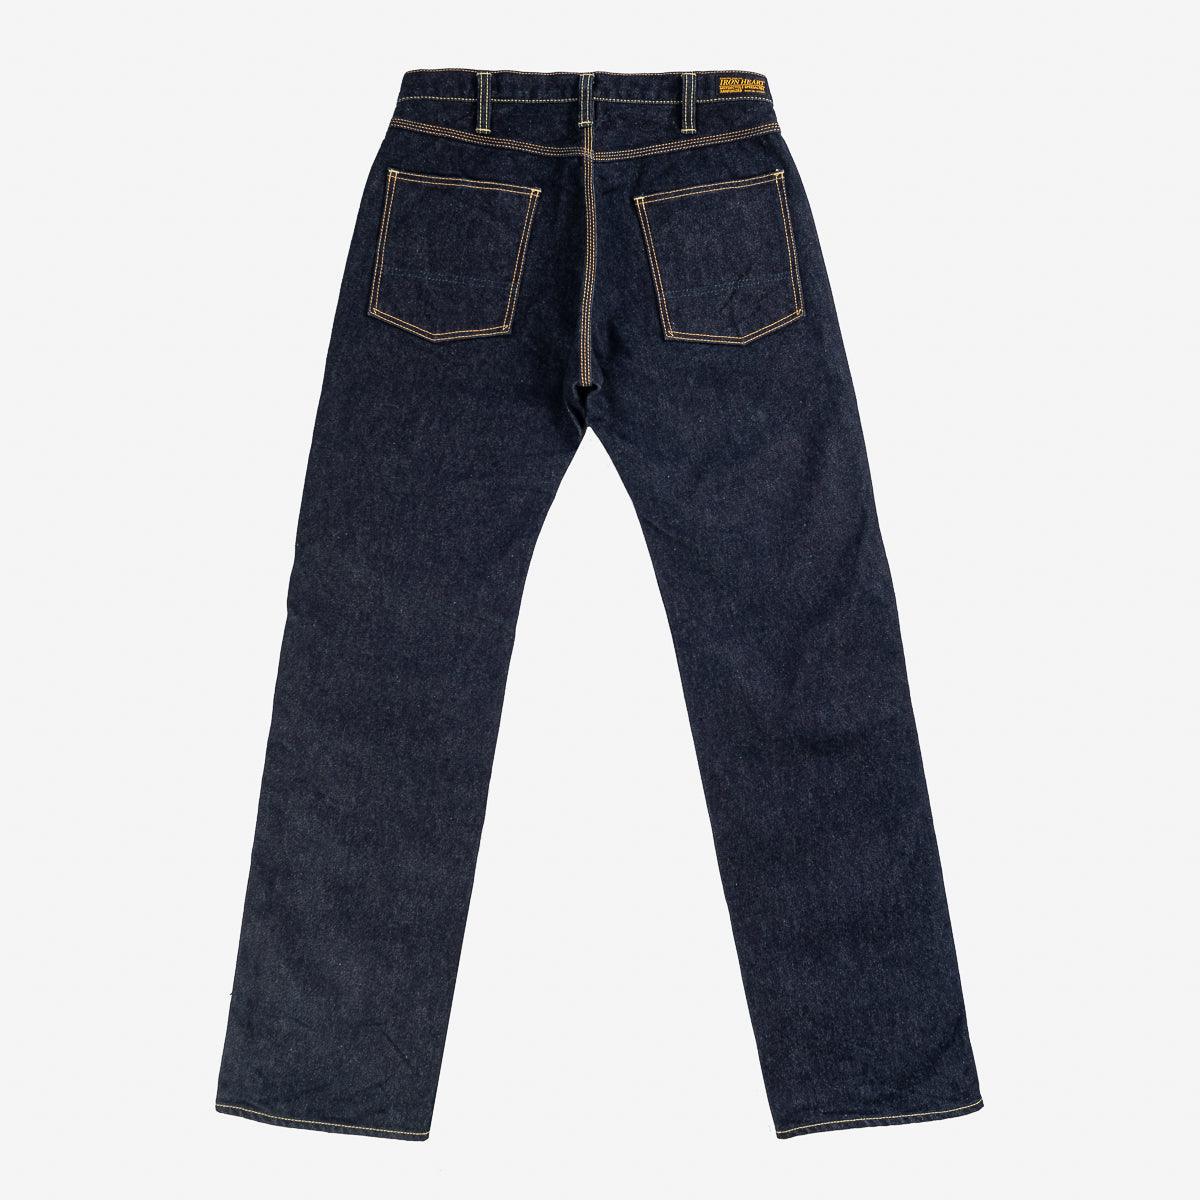 Work Jeans & Denim Work Pants